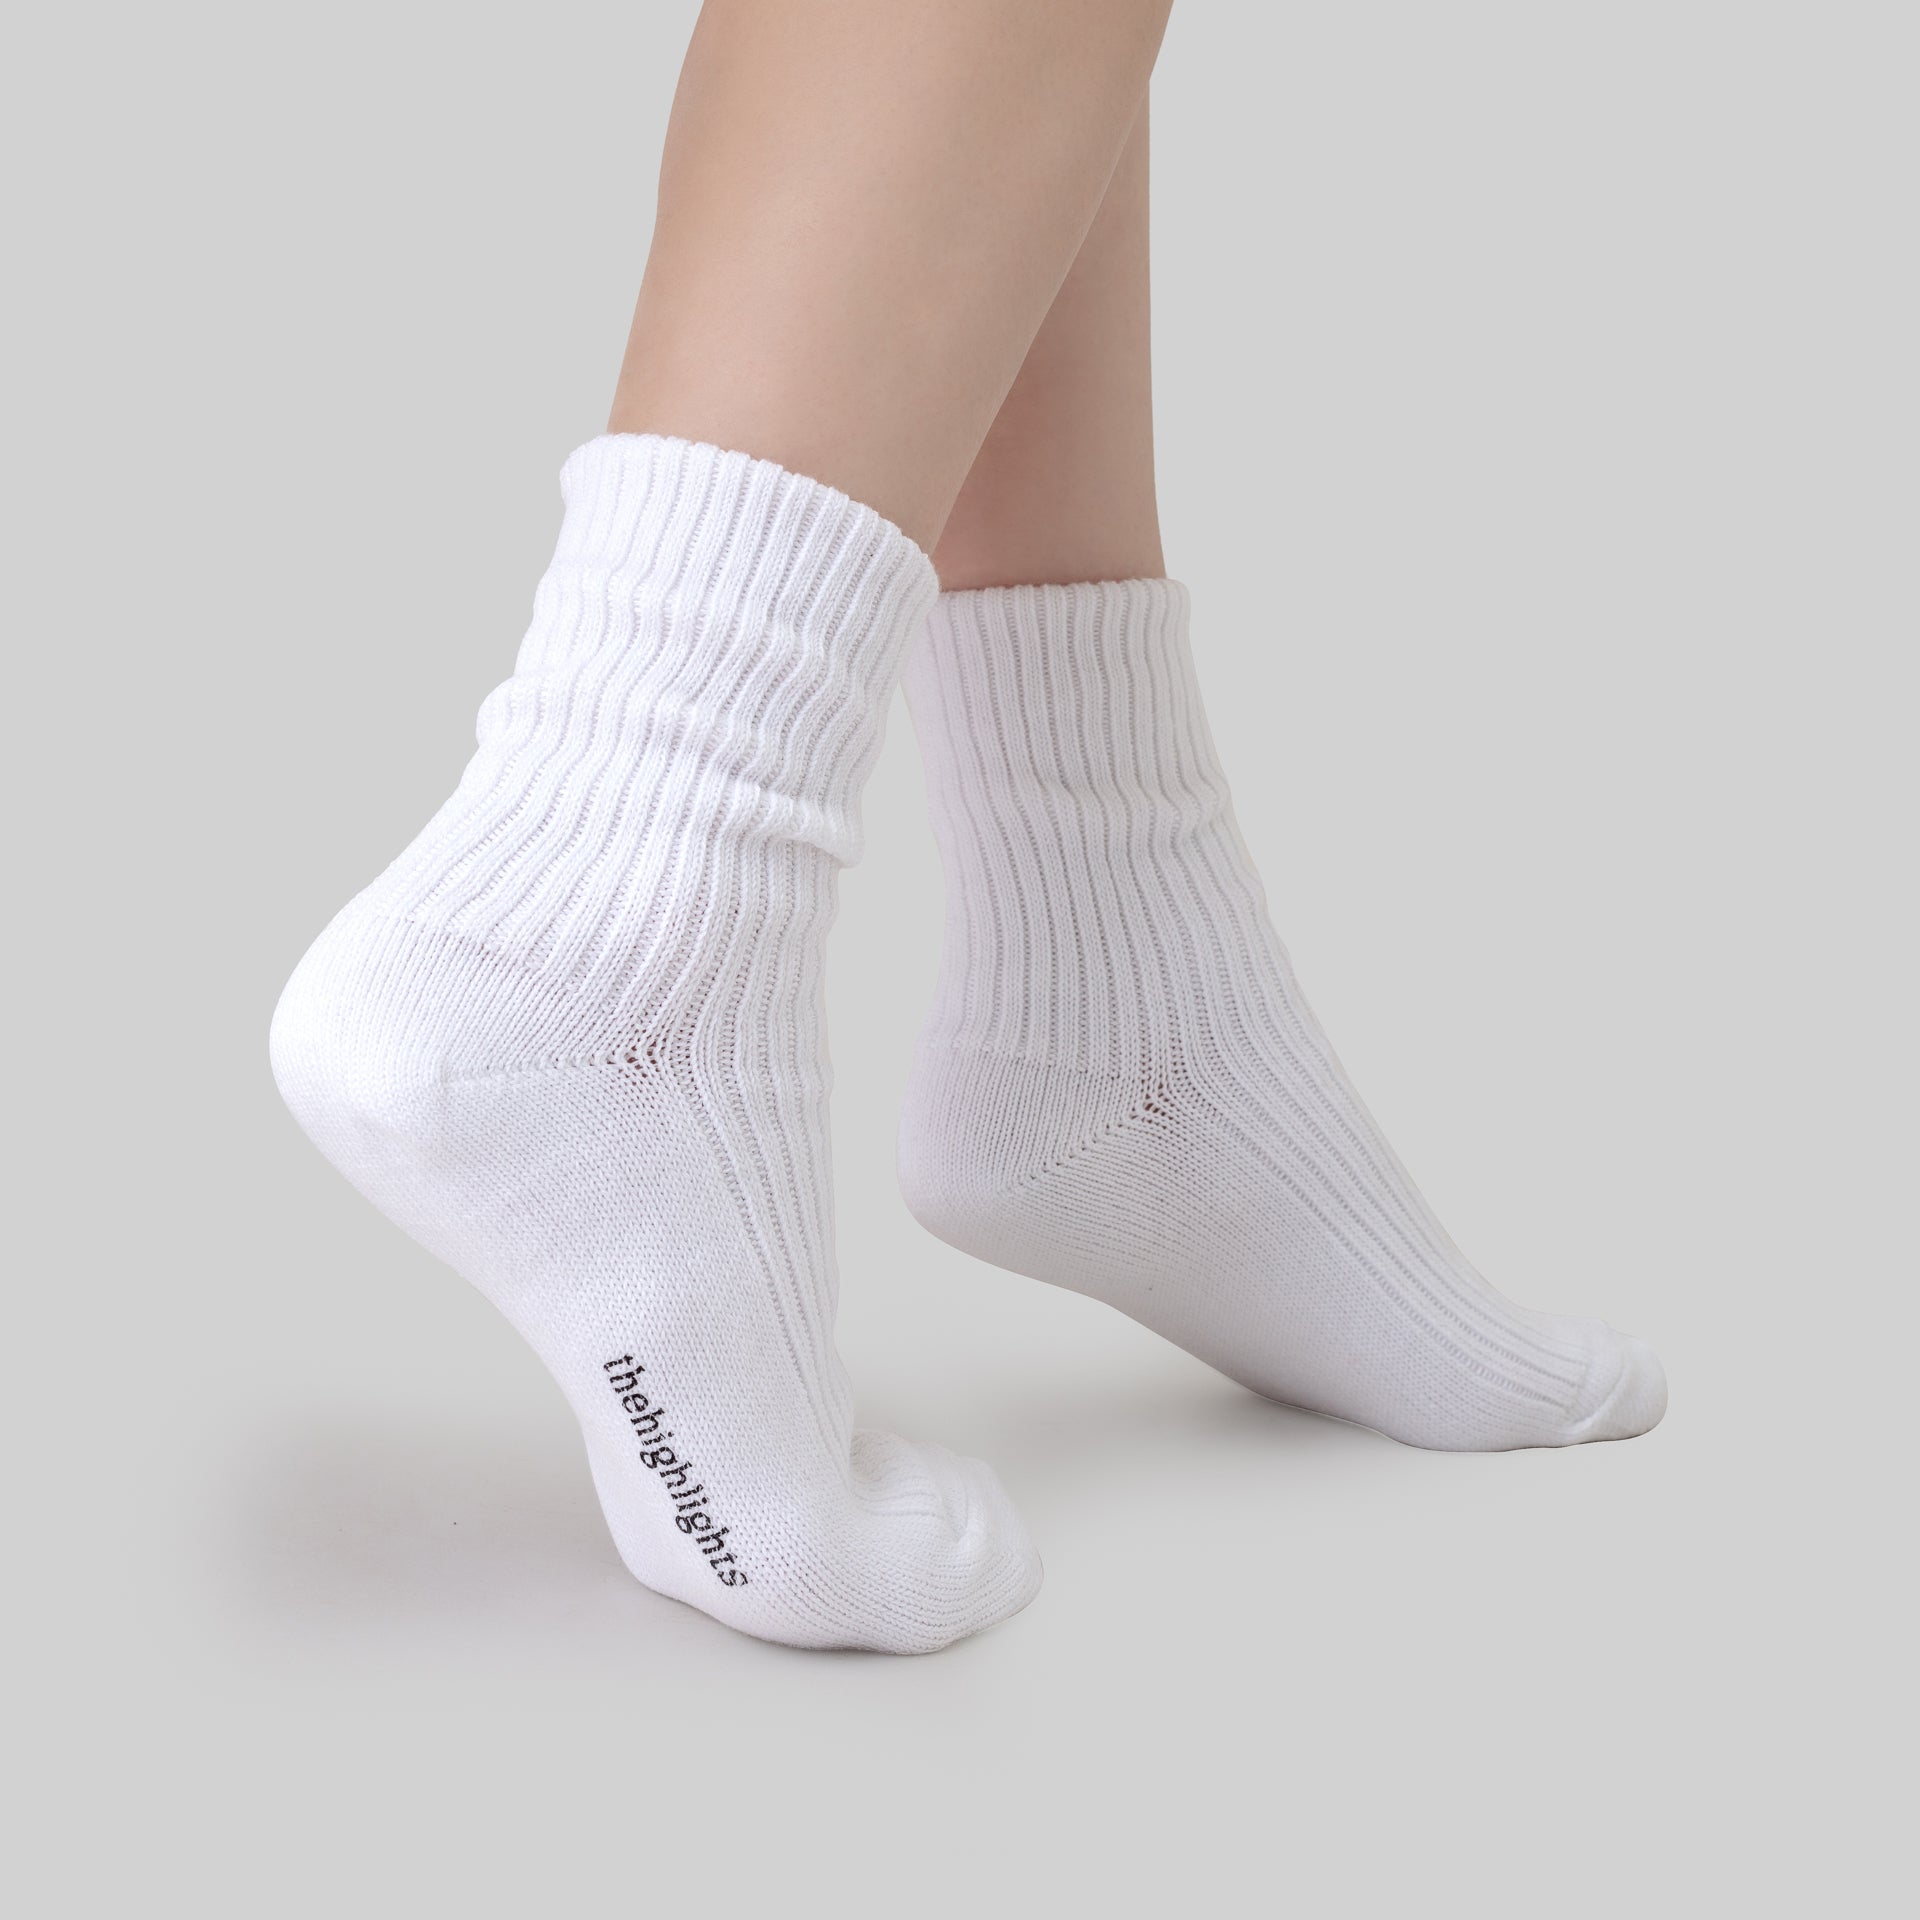 '2pair socks' heavy-duty cotton socks